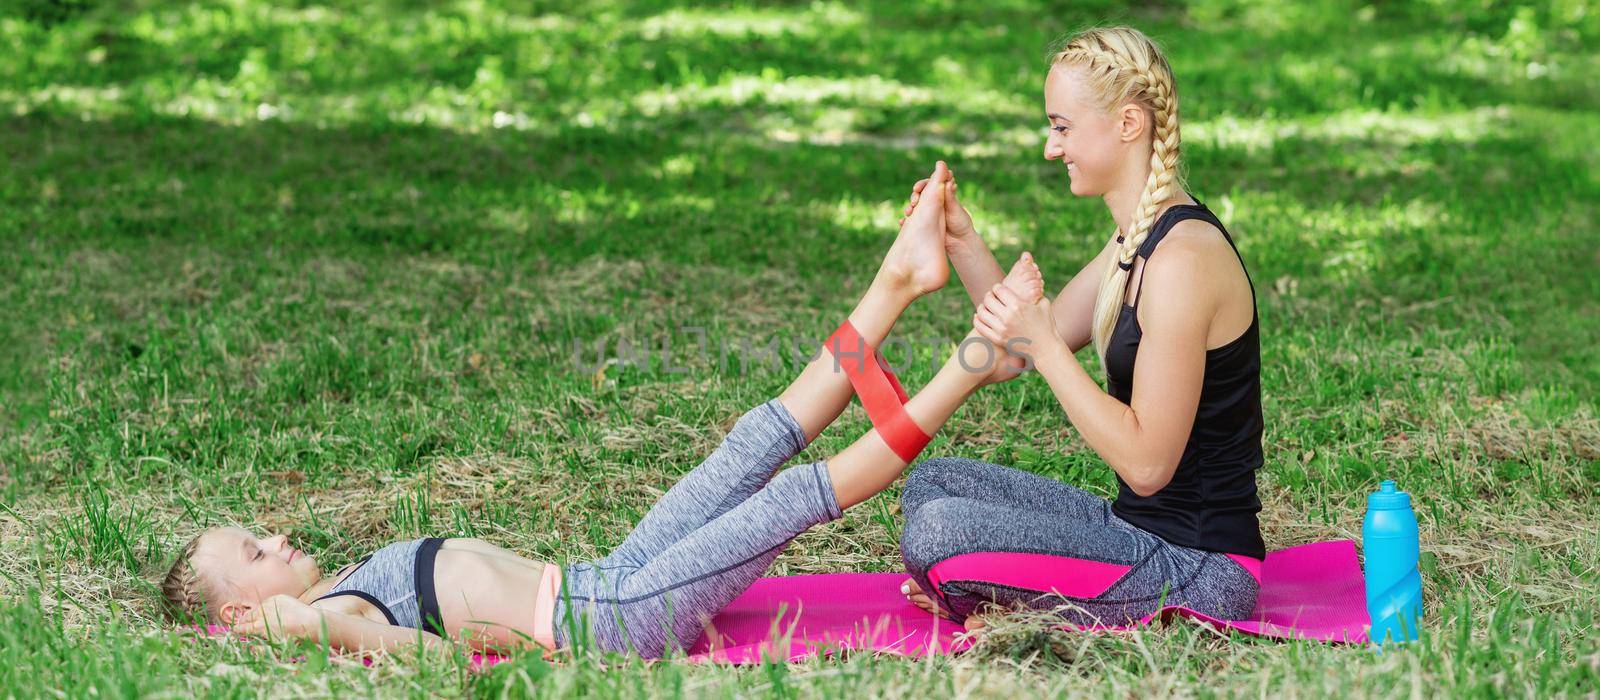 Mom trains daughter's legs by fitness gum by okskukuruza